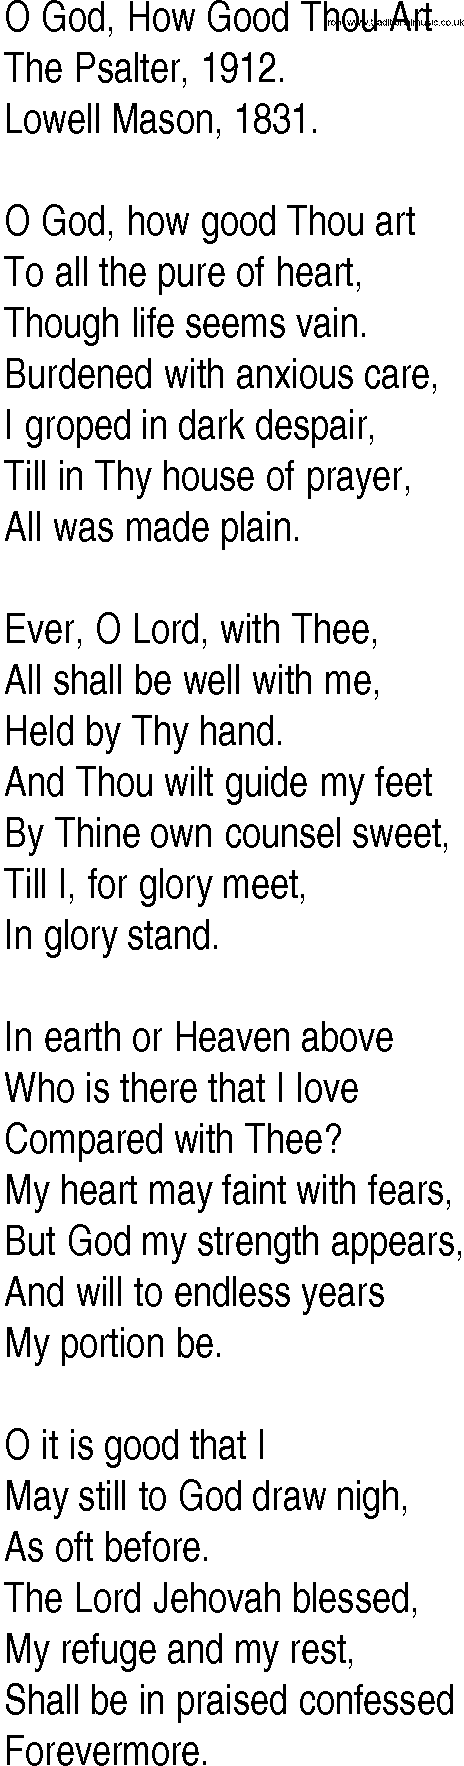 Hymn and Gospel Song: O God, How Good Thou Art by The Psalter lyrics